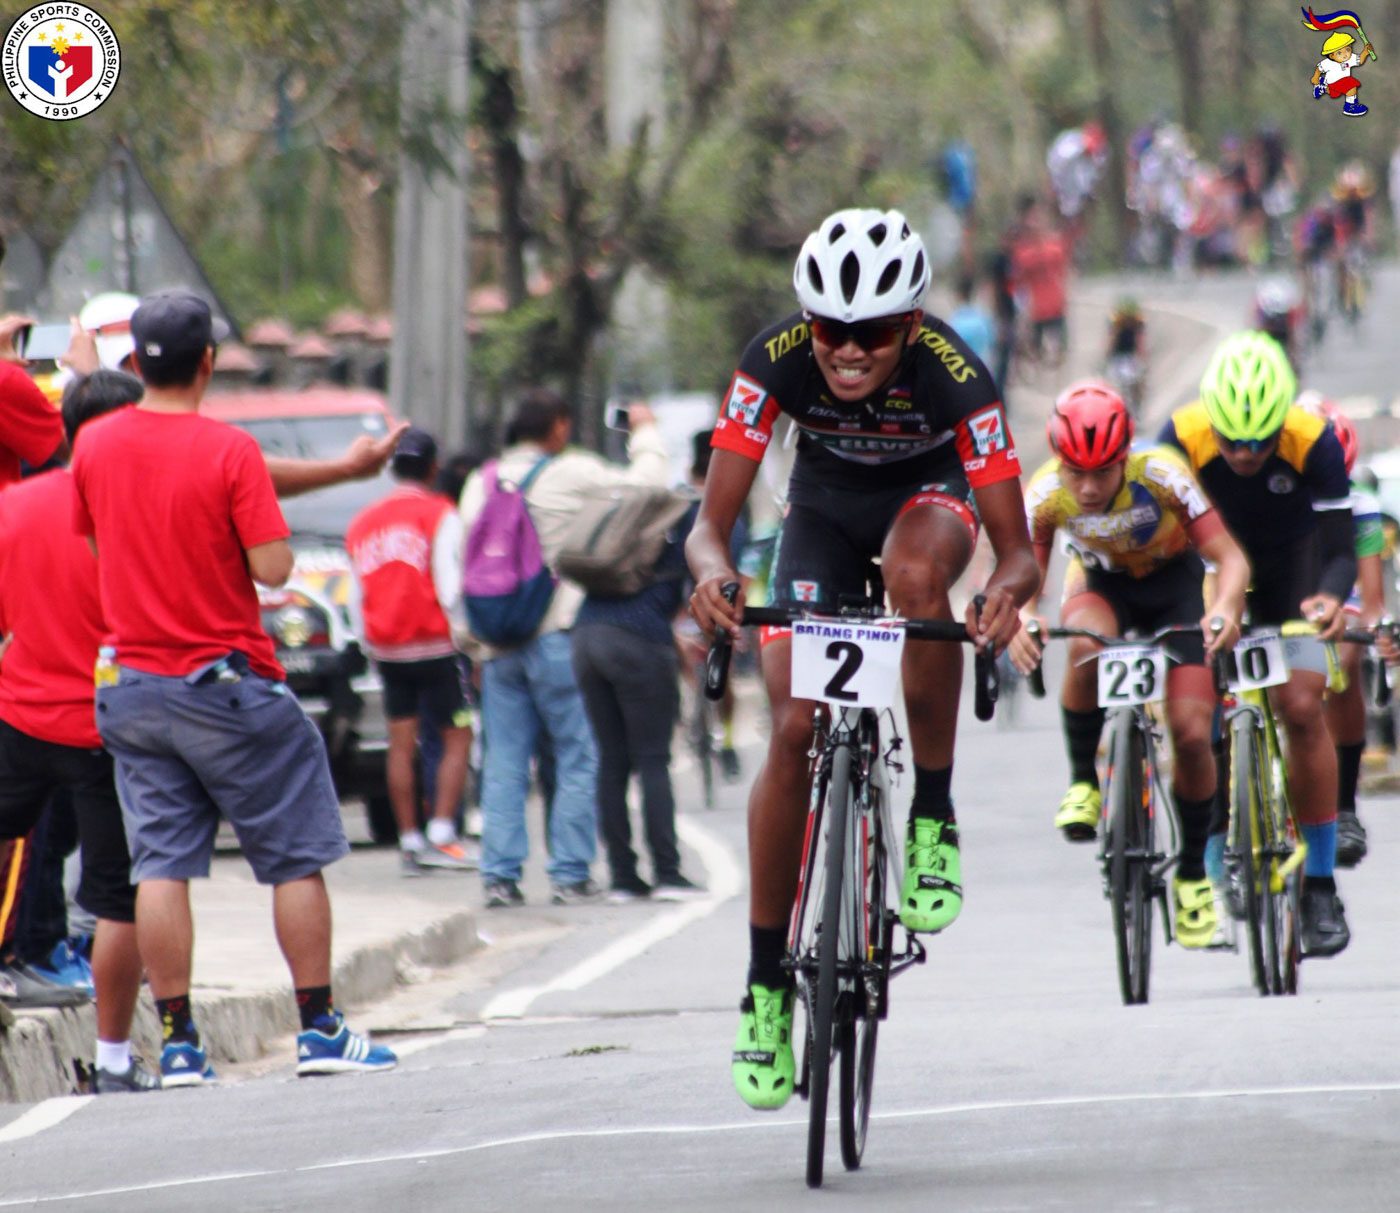 Fil-Italian rider triumphs in 2018 Batang Pinoy cycling